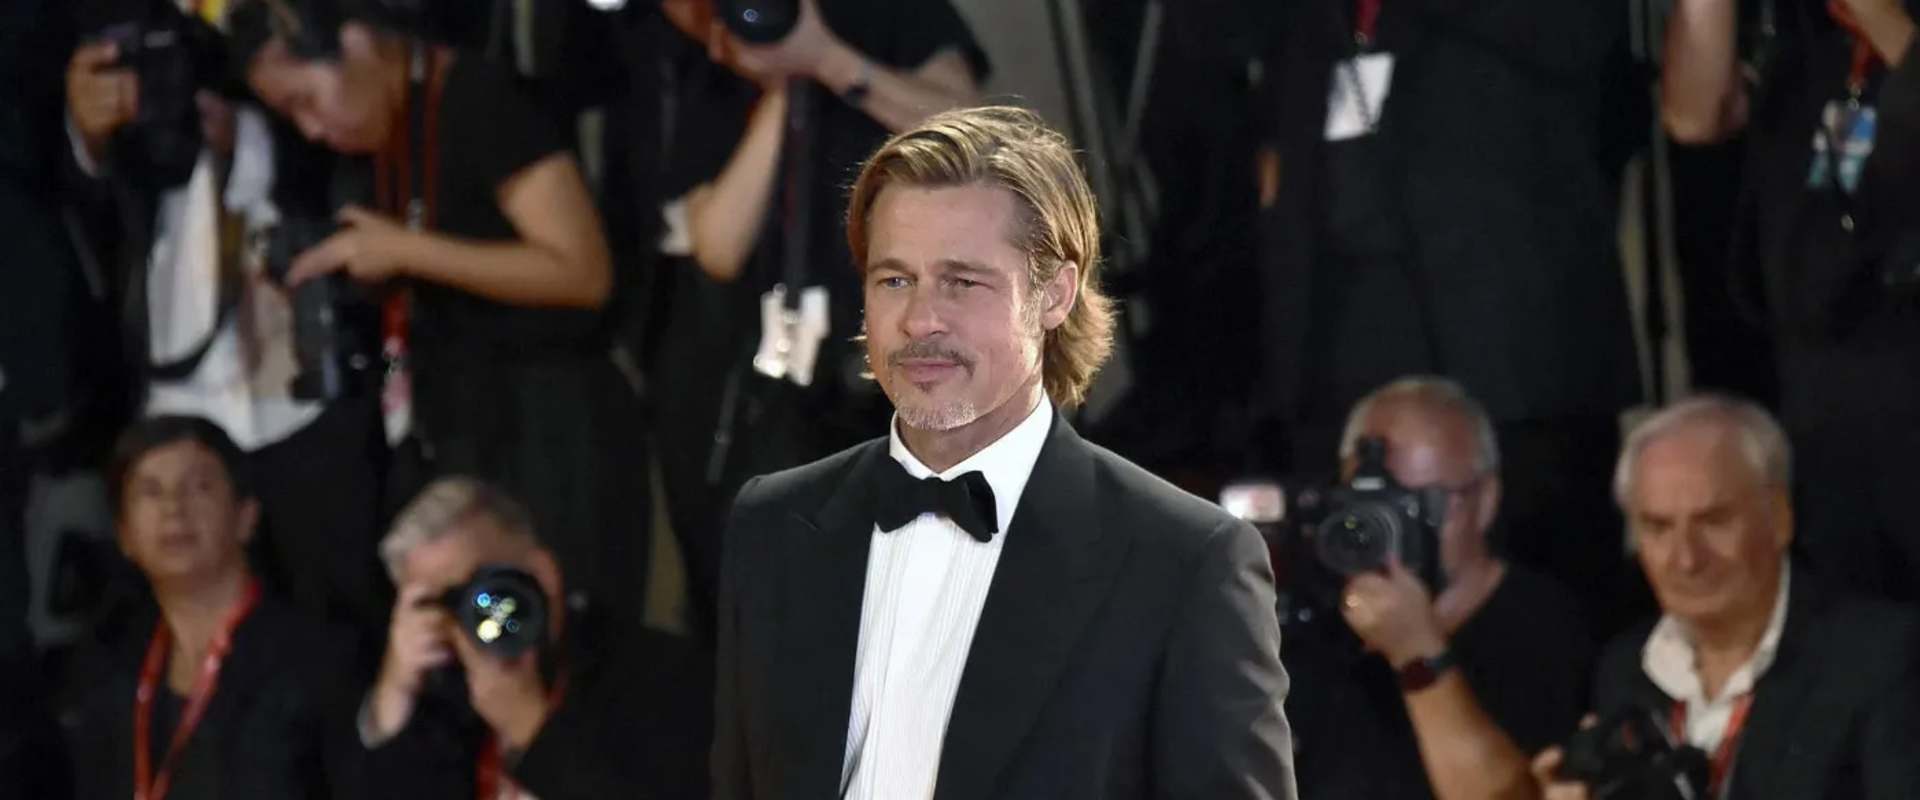 Brad Pitt: More Than a Pretty Face background 1